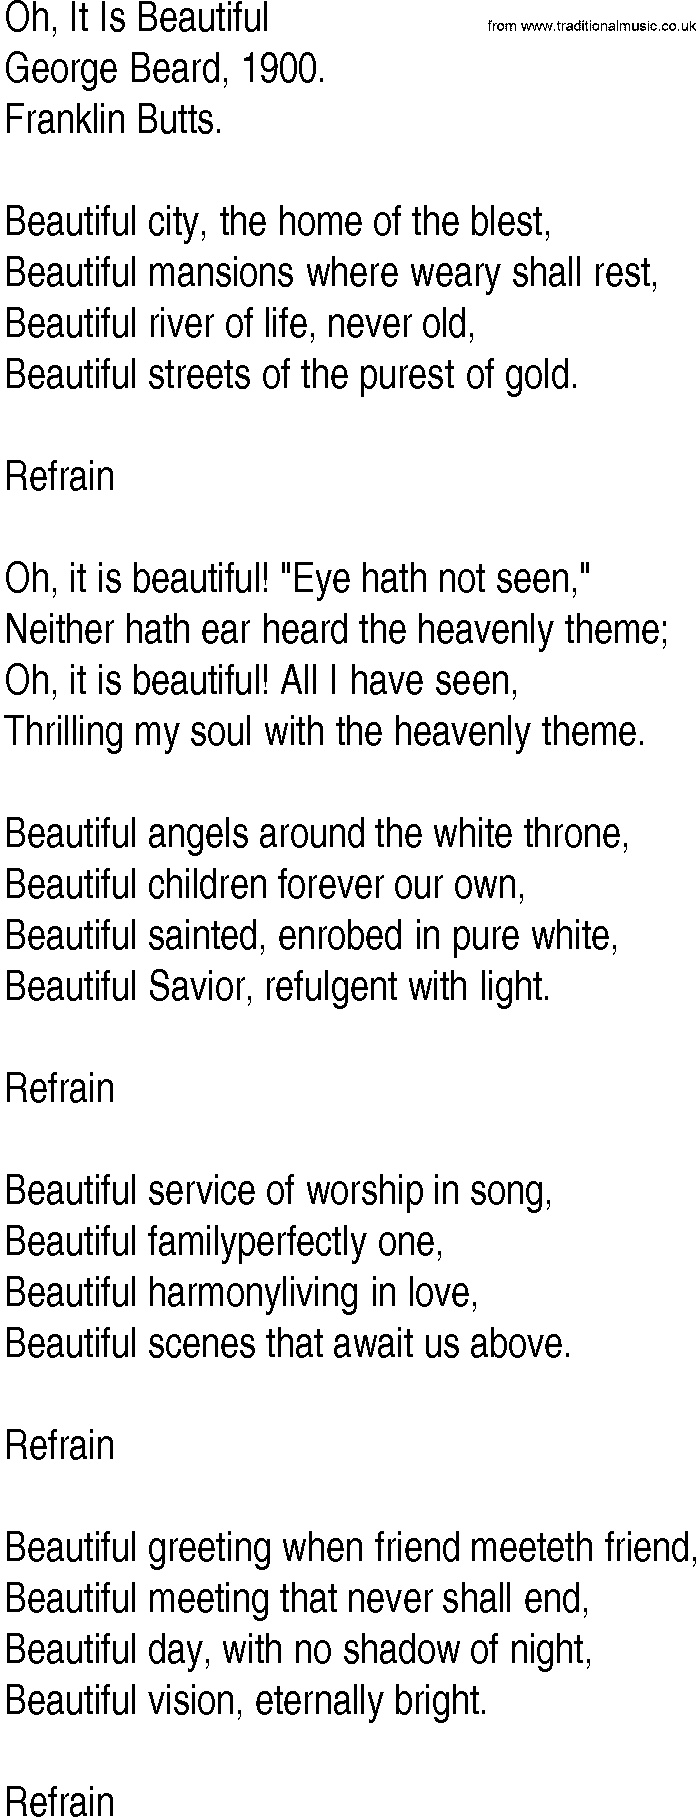 Hymn and Gospel Song: Oh, It Is Beautiful by George Beard lyrics